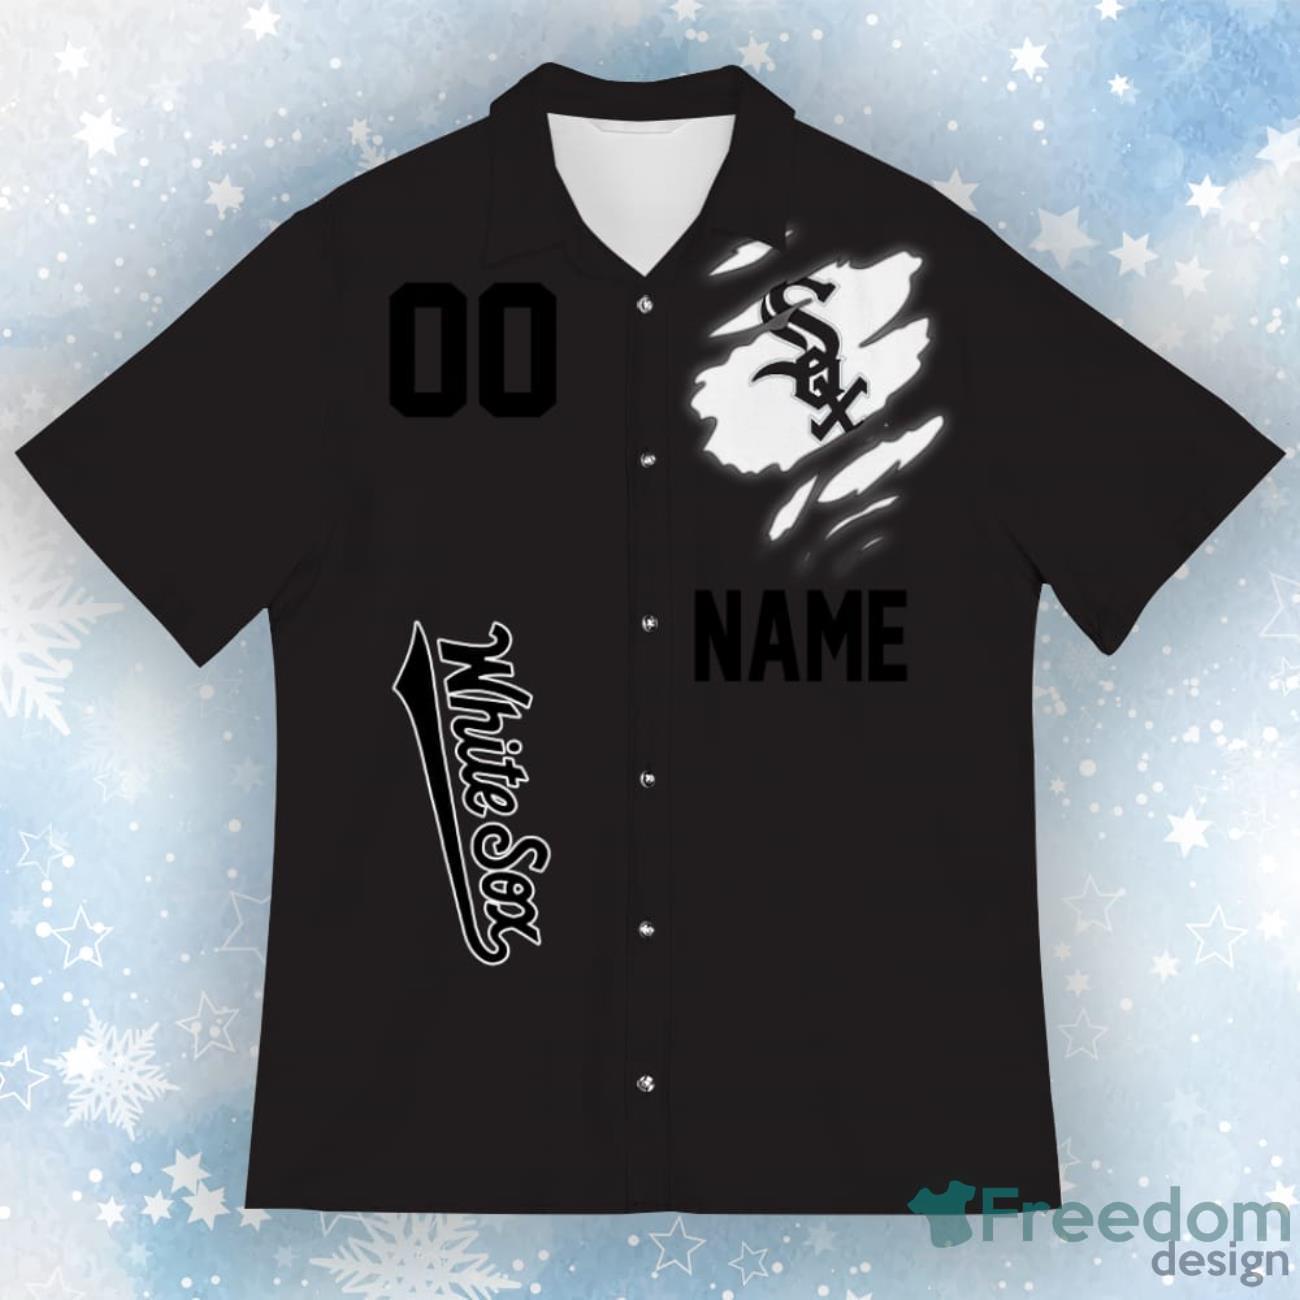 Chicago White Sox Personalized Baseball Jersey Shirt - T-shirts Low Price